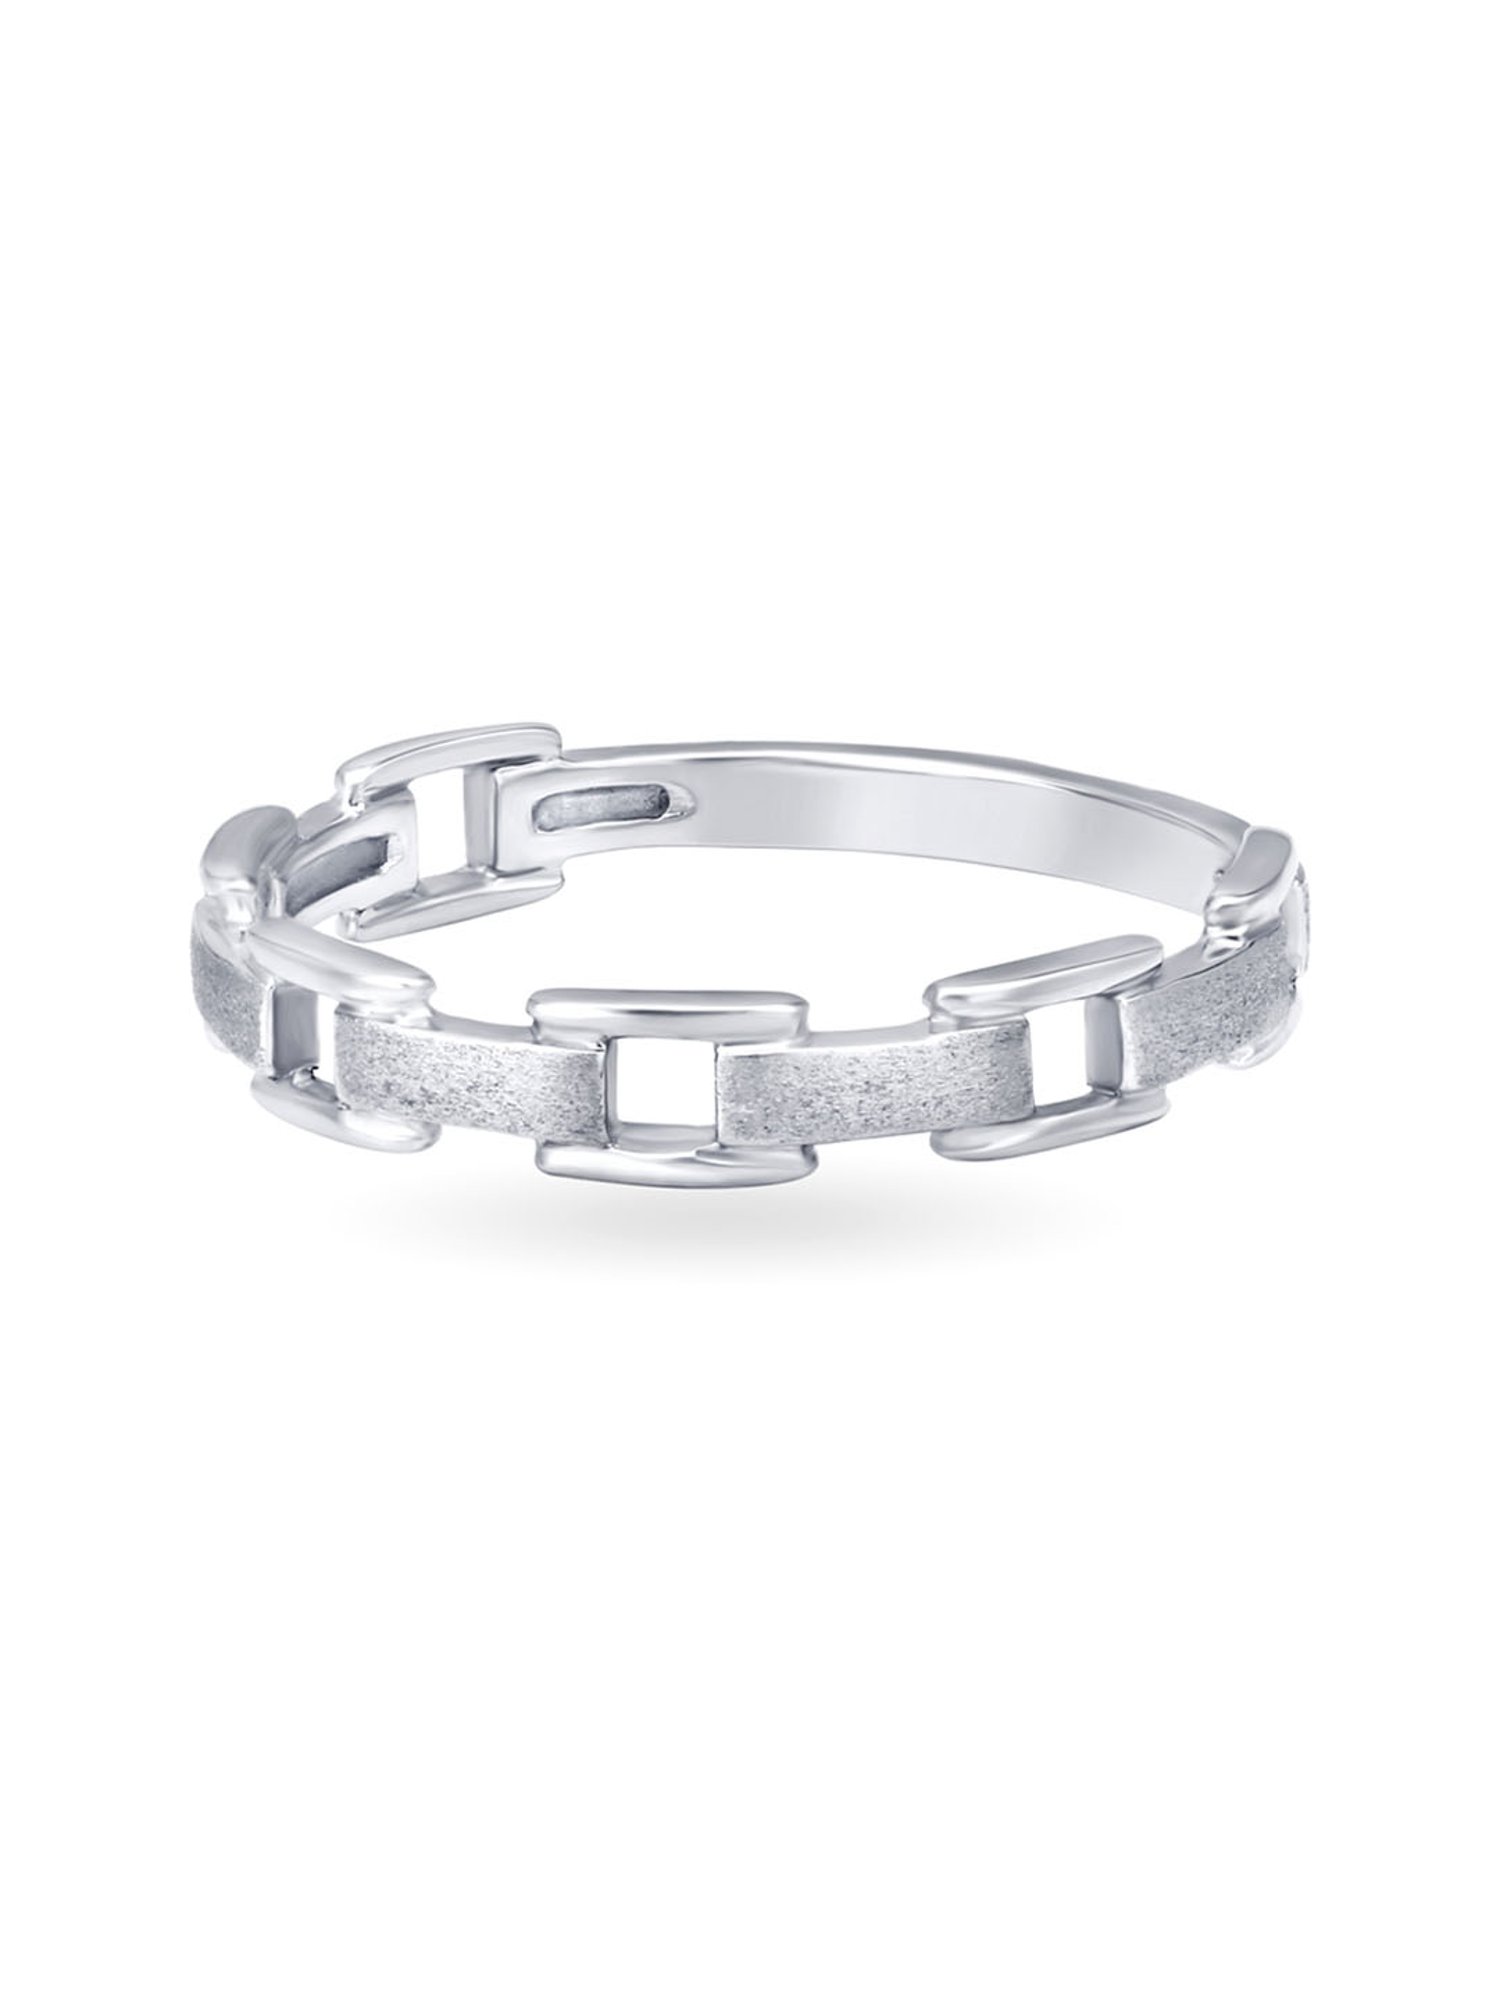 Buy Sleek Diamond and Platinum Ring Online | ORRA